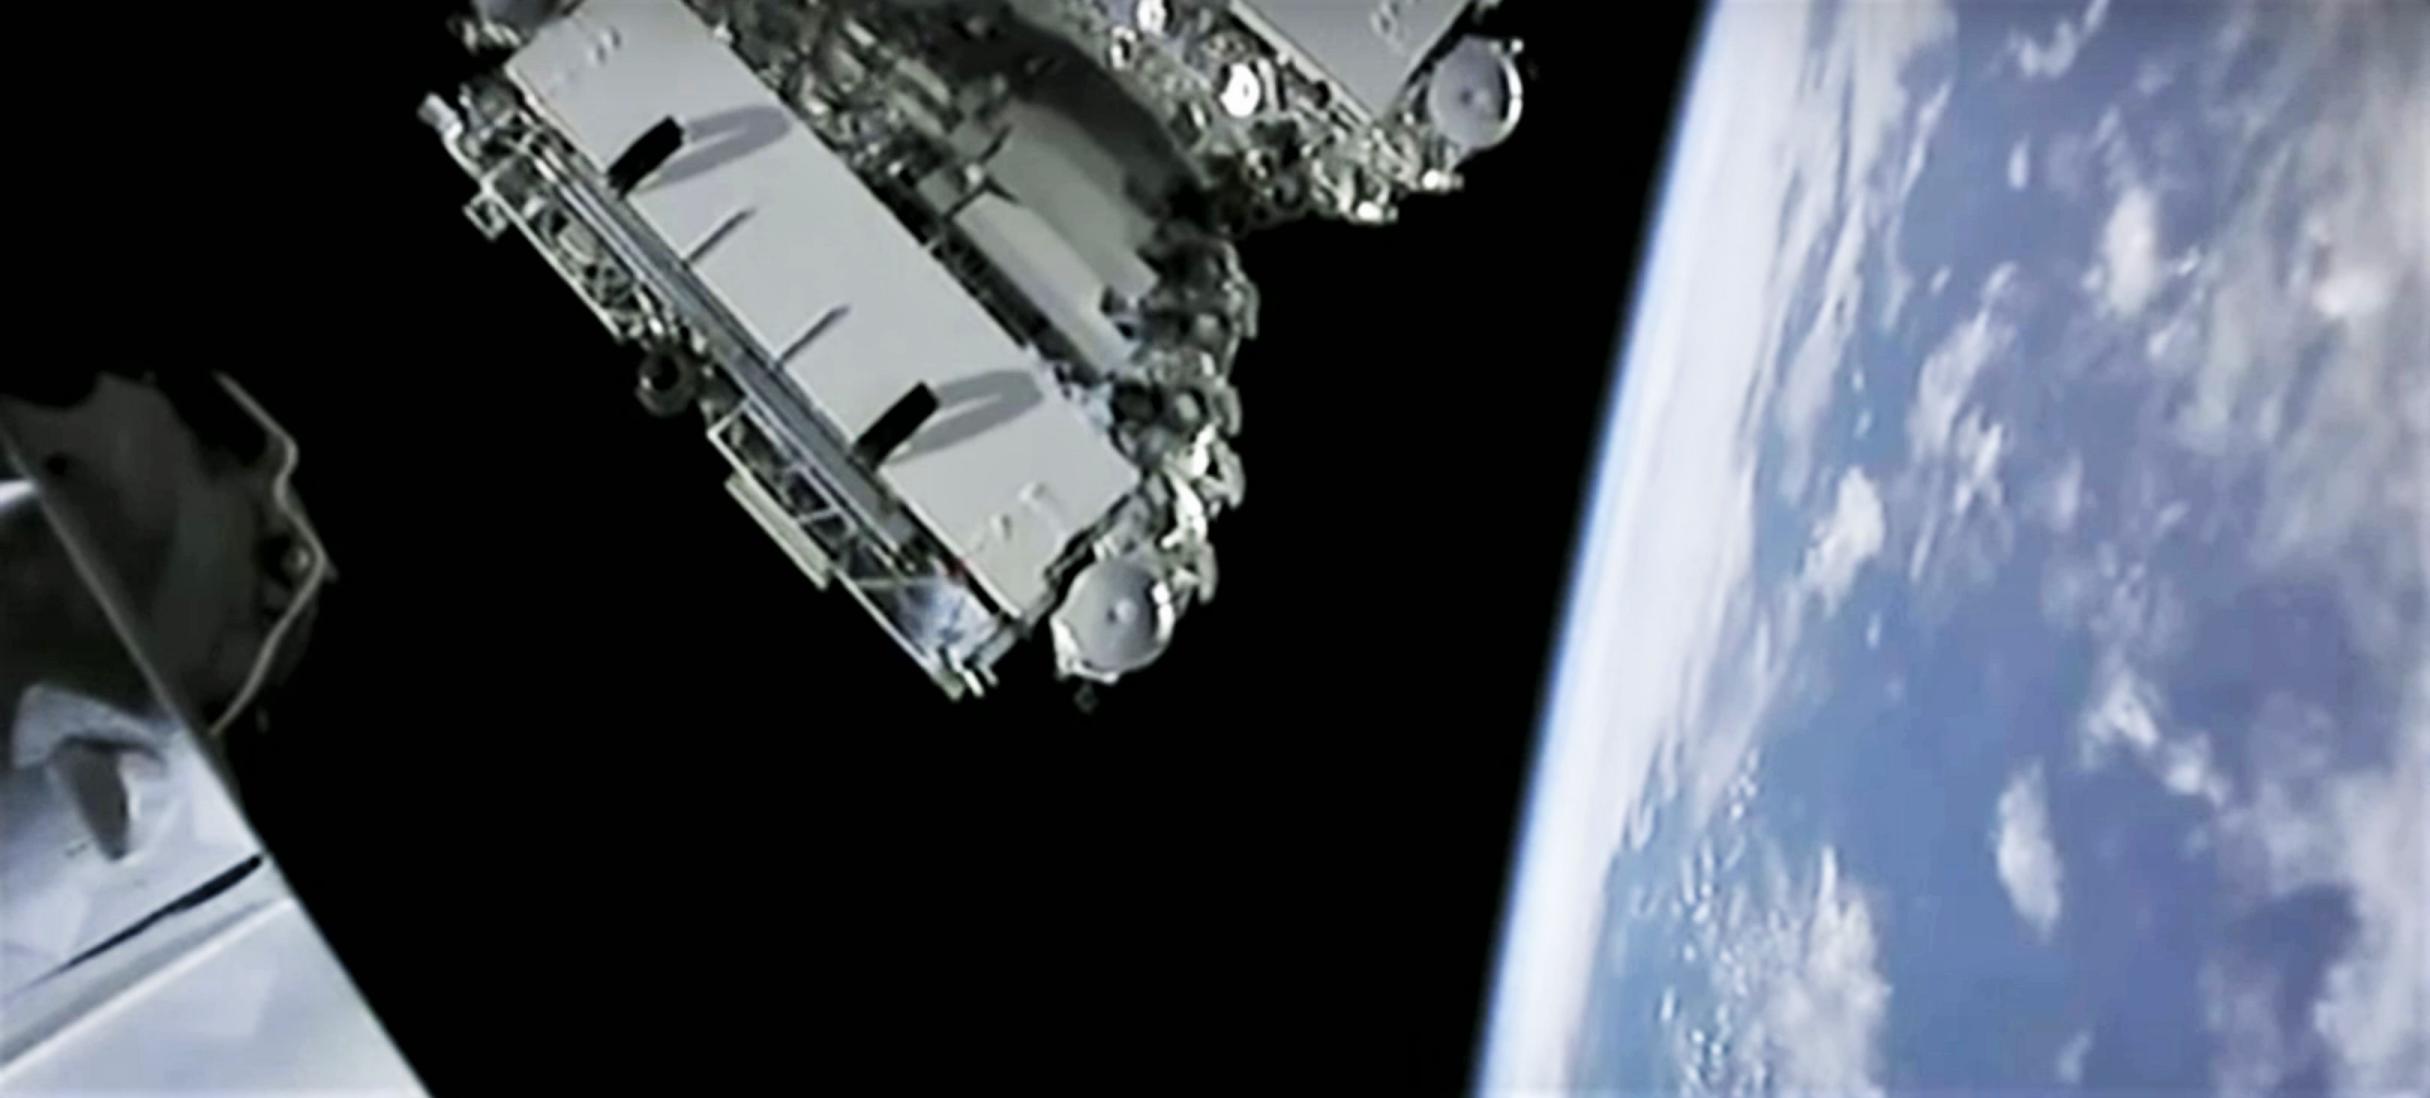 Starlink-2 Falcon 9 B1049 webcast (SpaceX) deployment 3 (c)